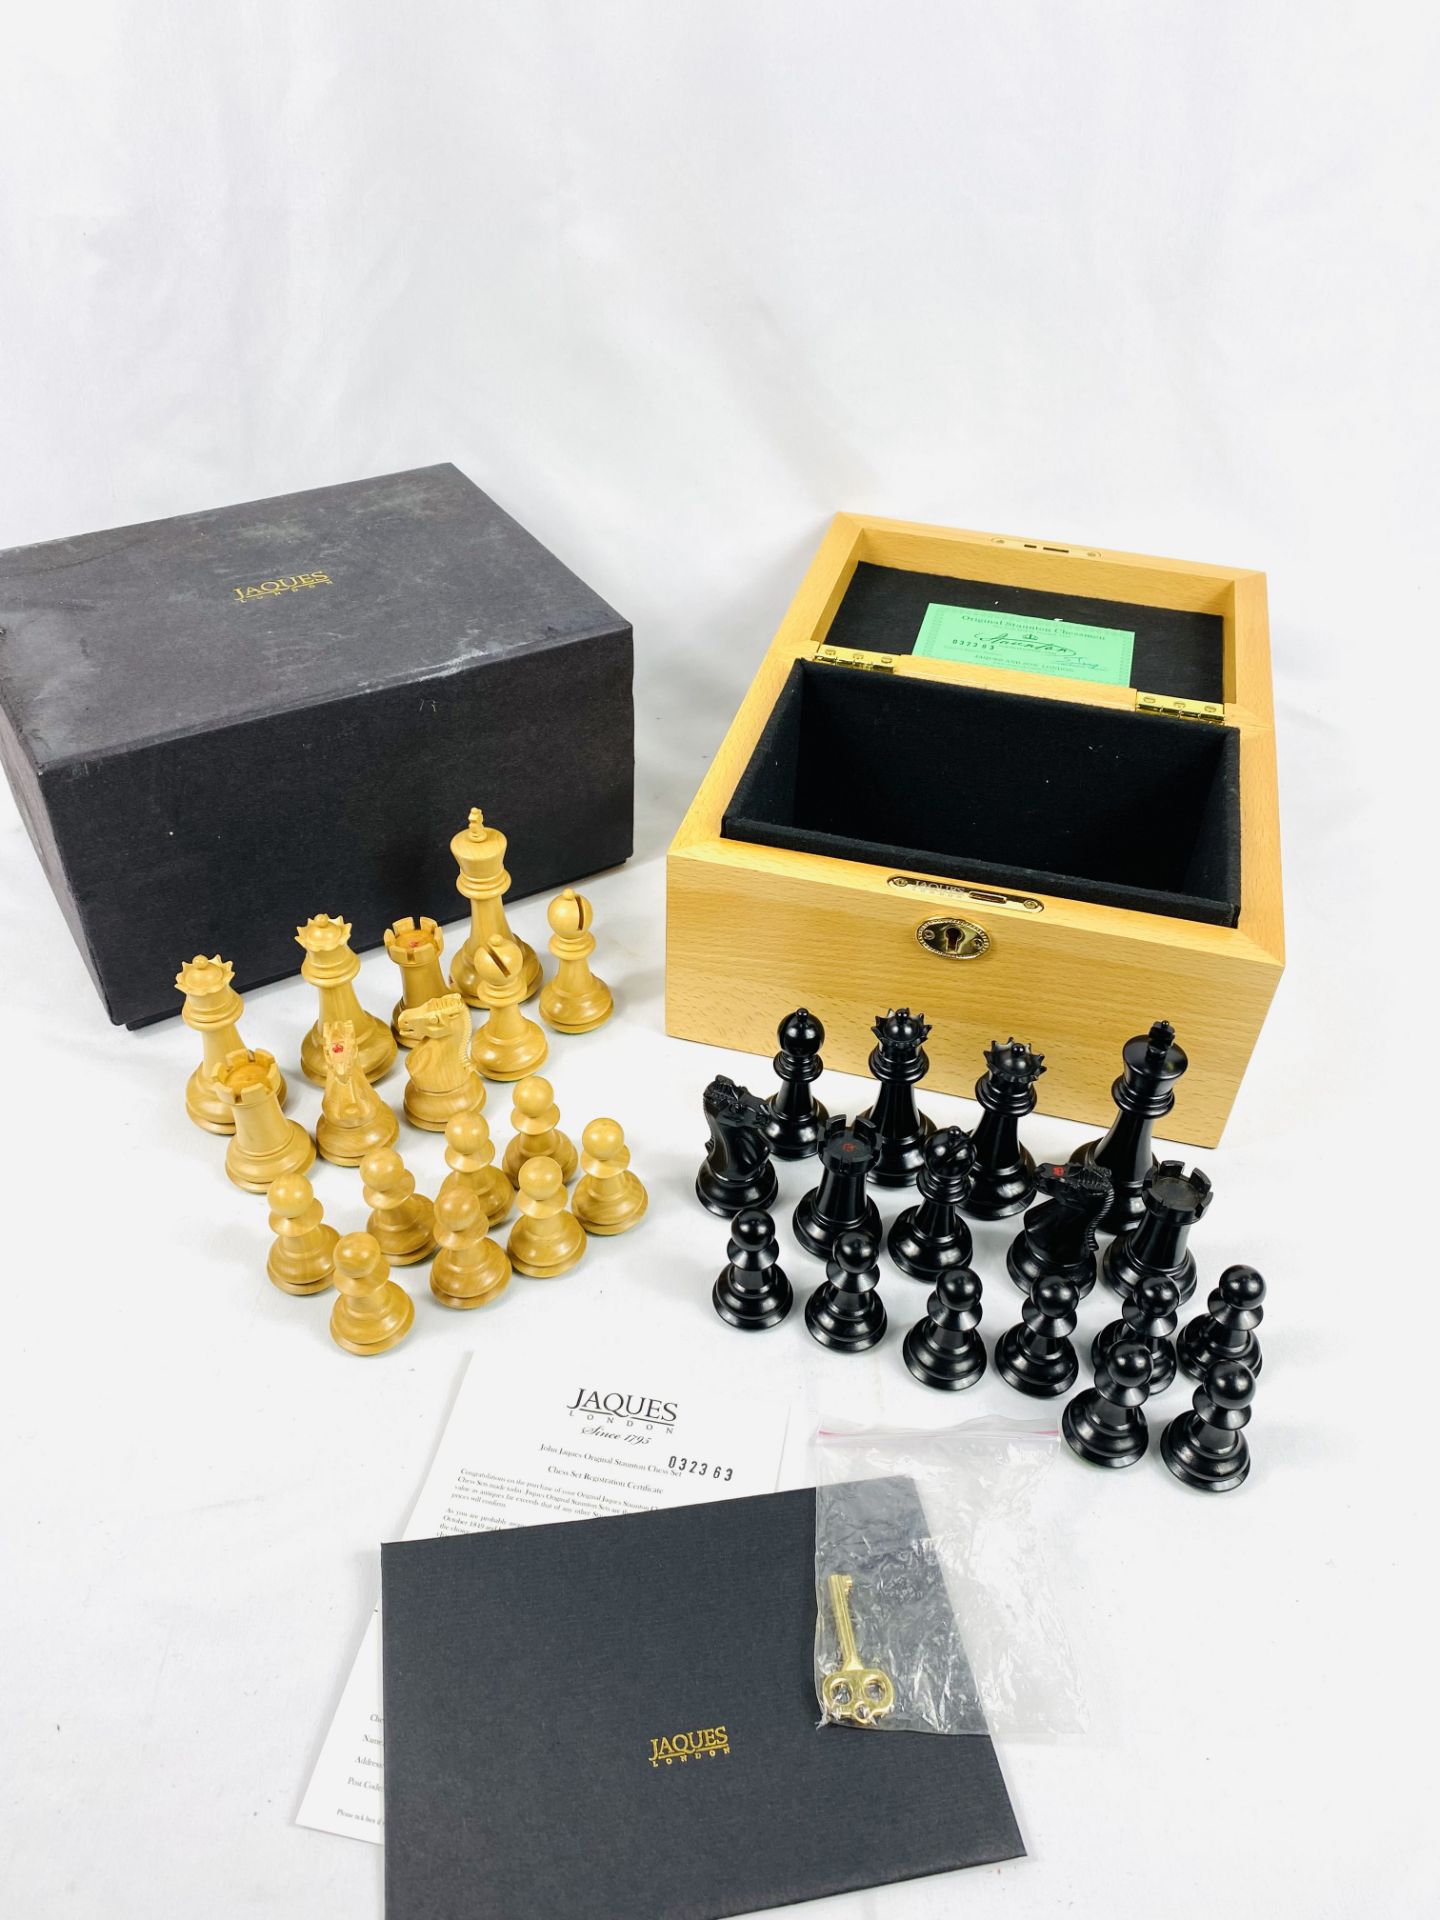 Jaques Staunton chess set - Image 4 of 6